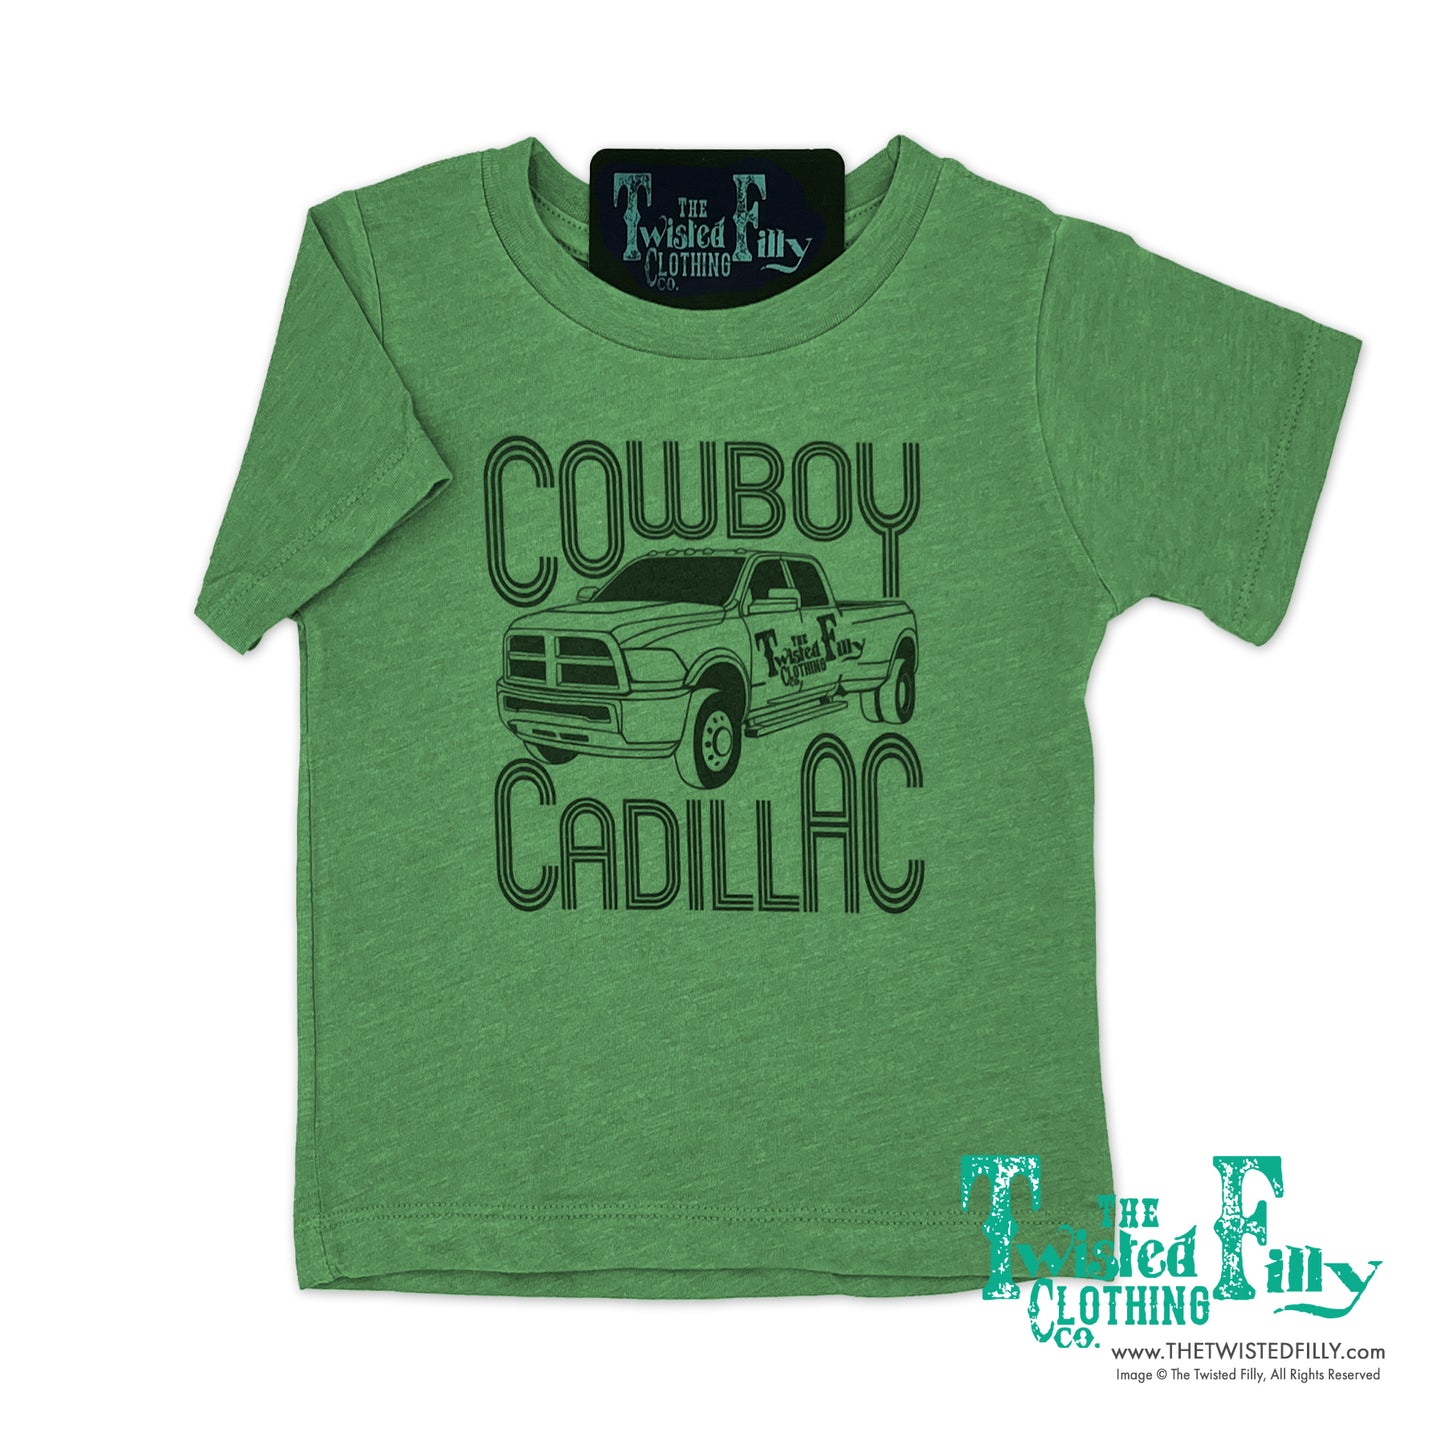 Cowboy Cadillac - S/S Youth Tee - Green